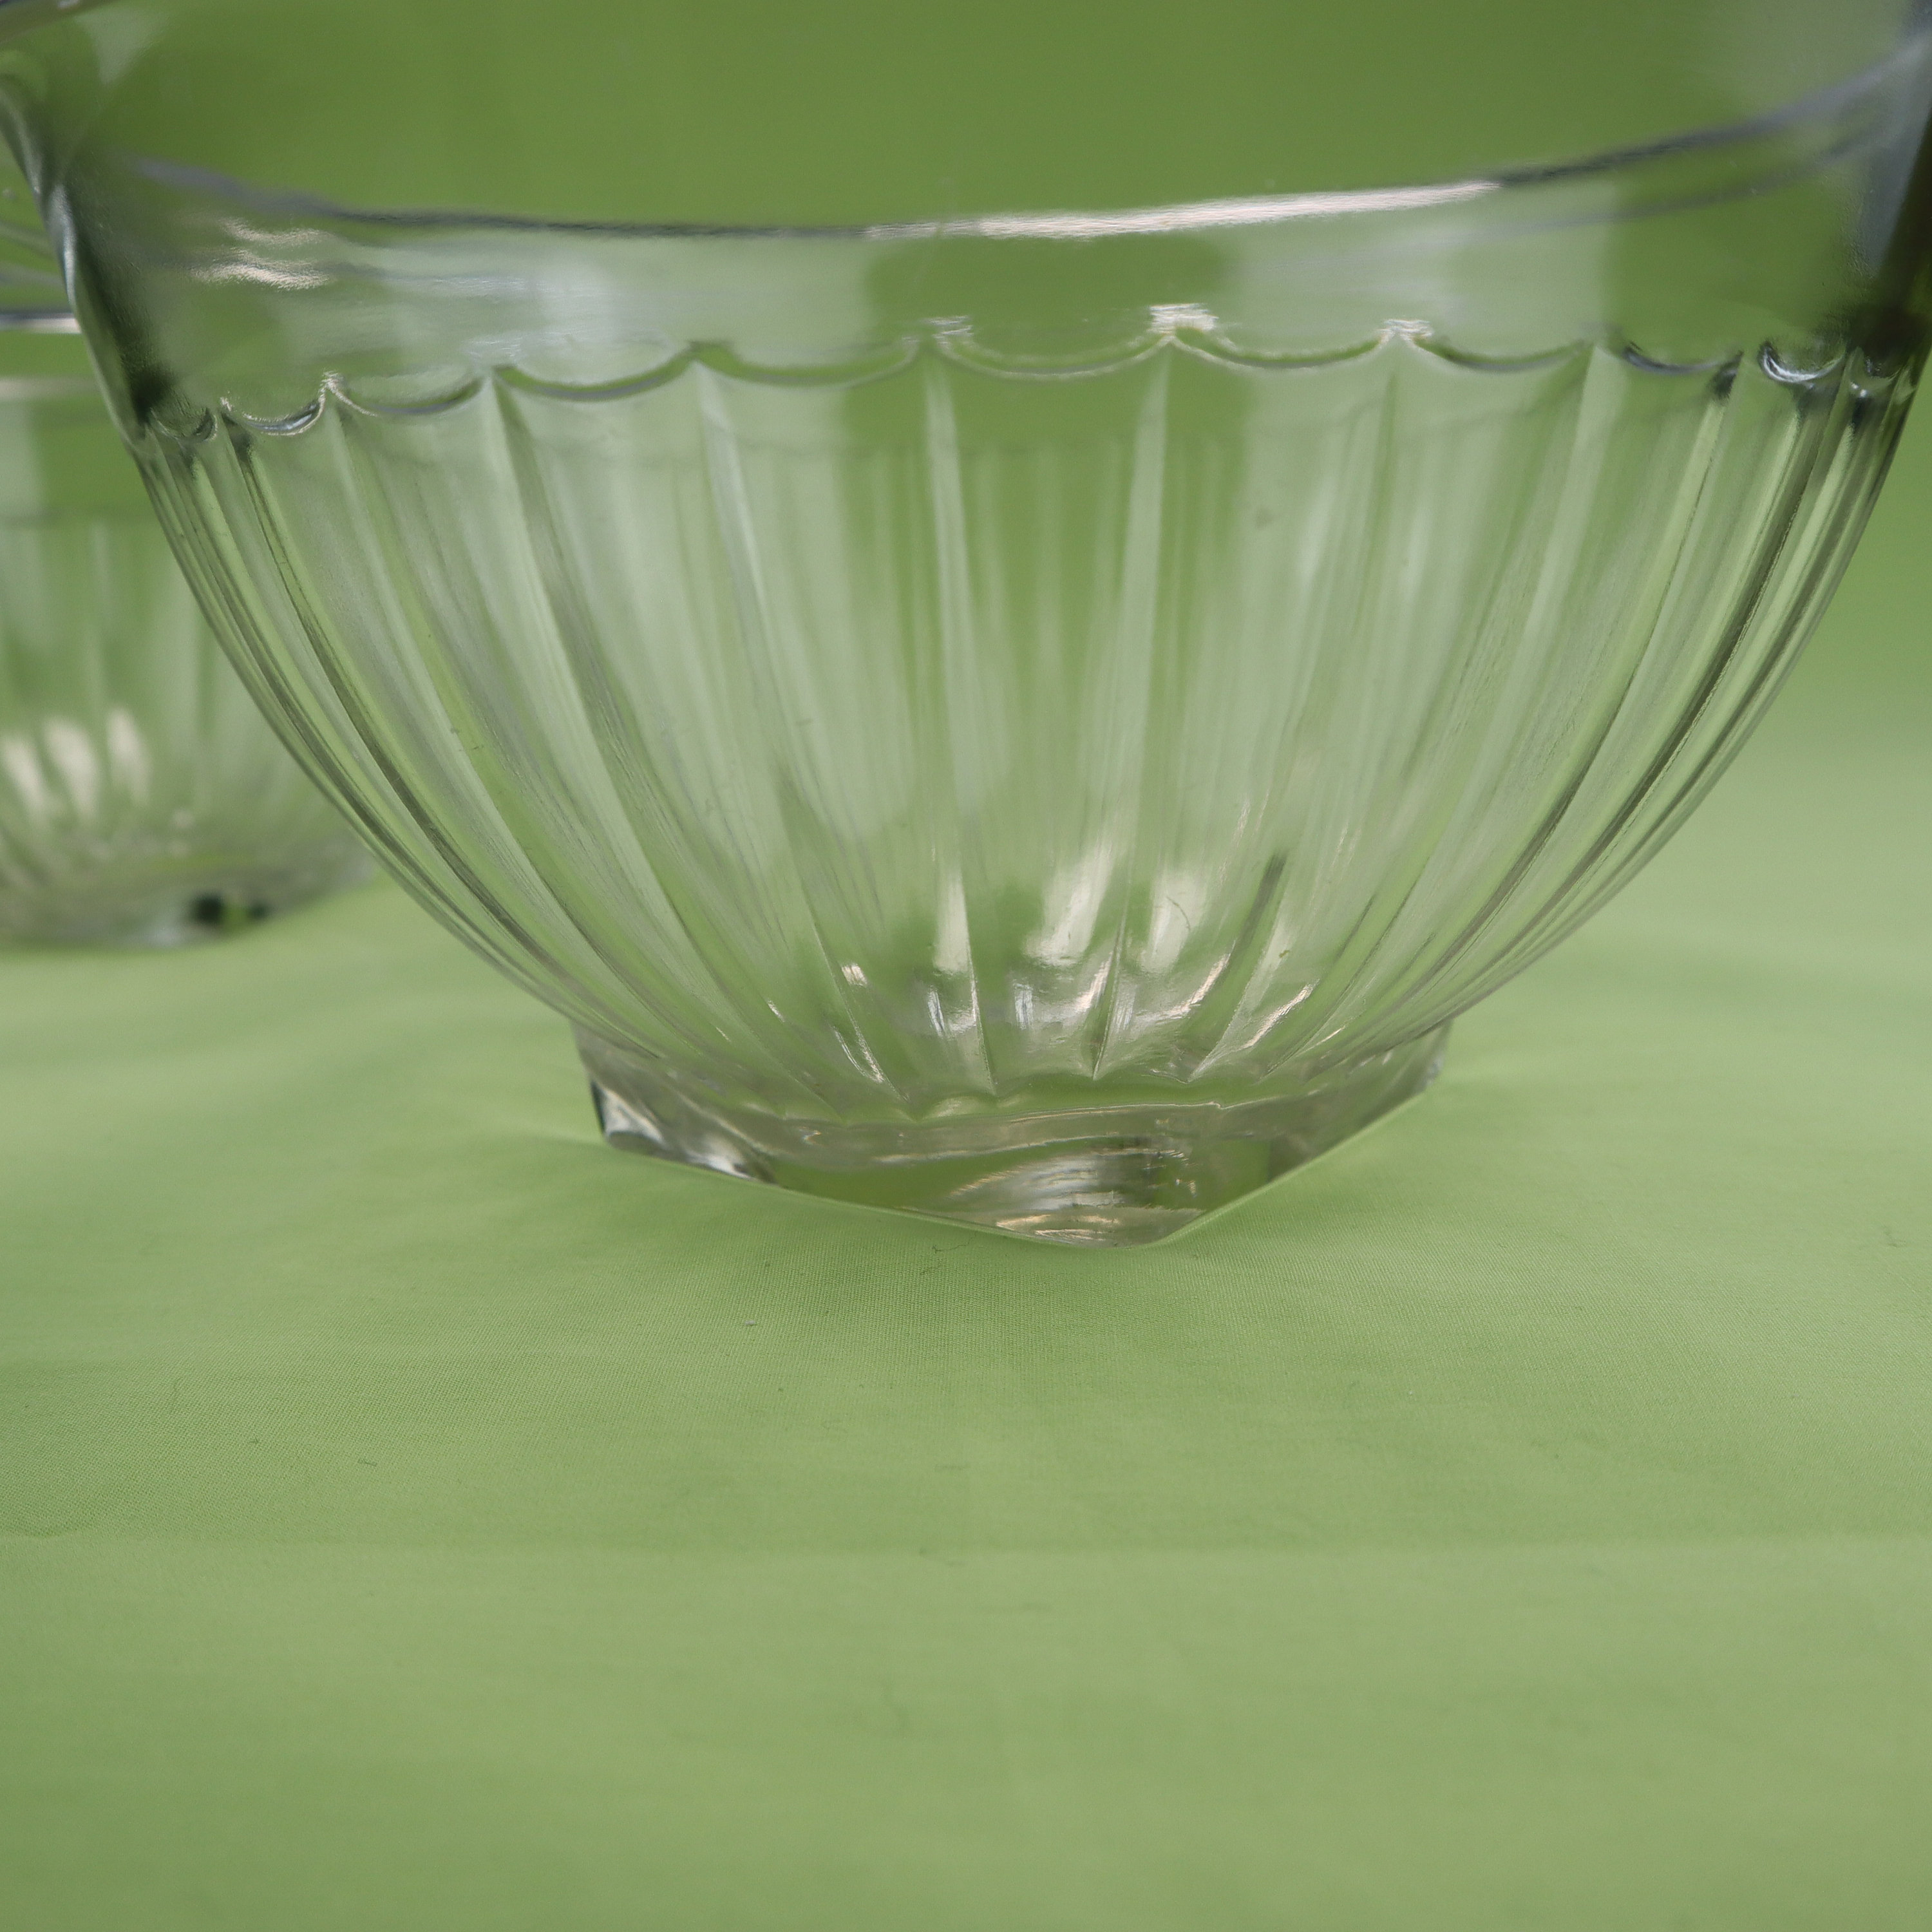 Vintage Diamon Crystal Shaker Salt clear mixing bowl 1940s kitchen decor